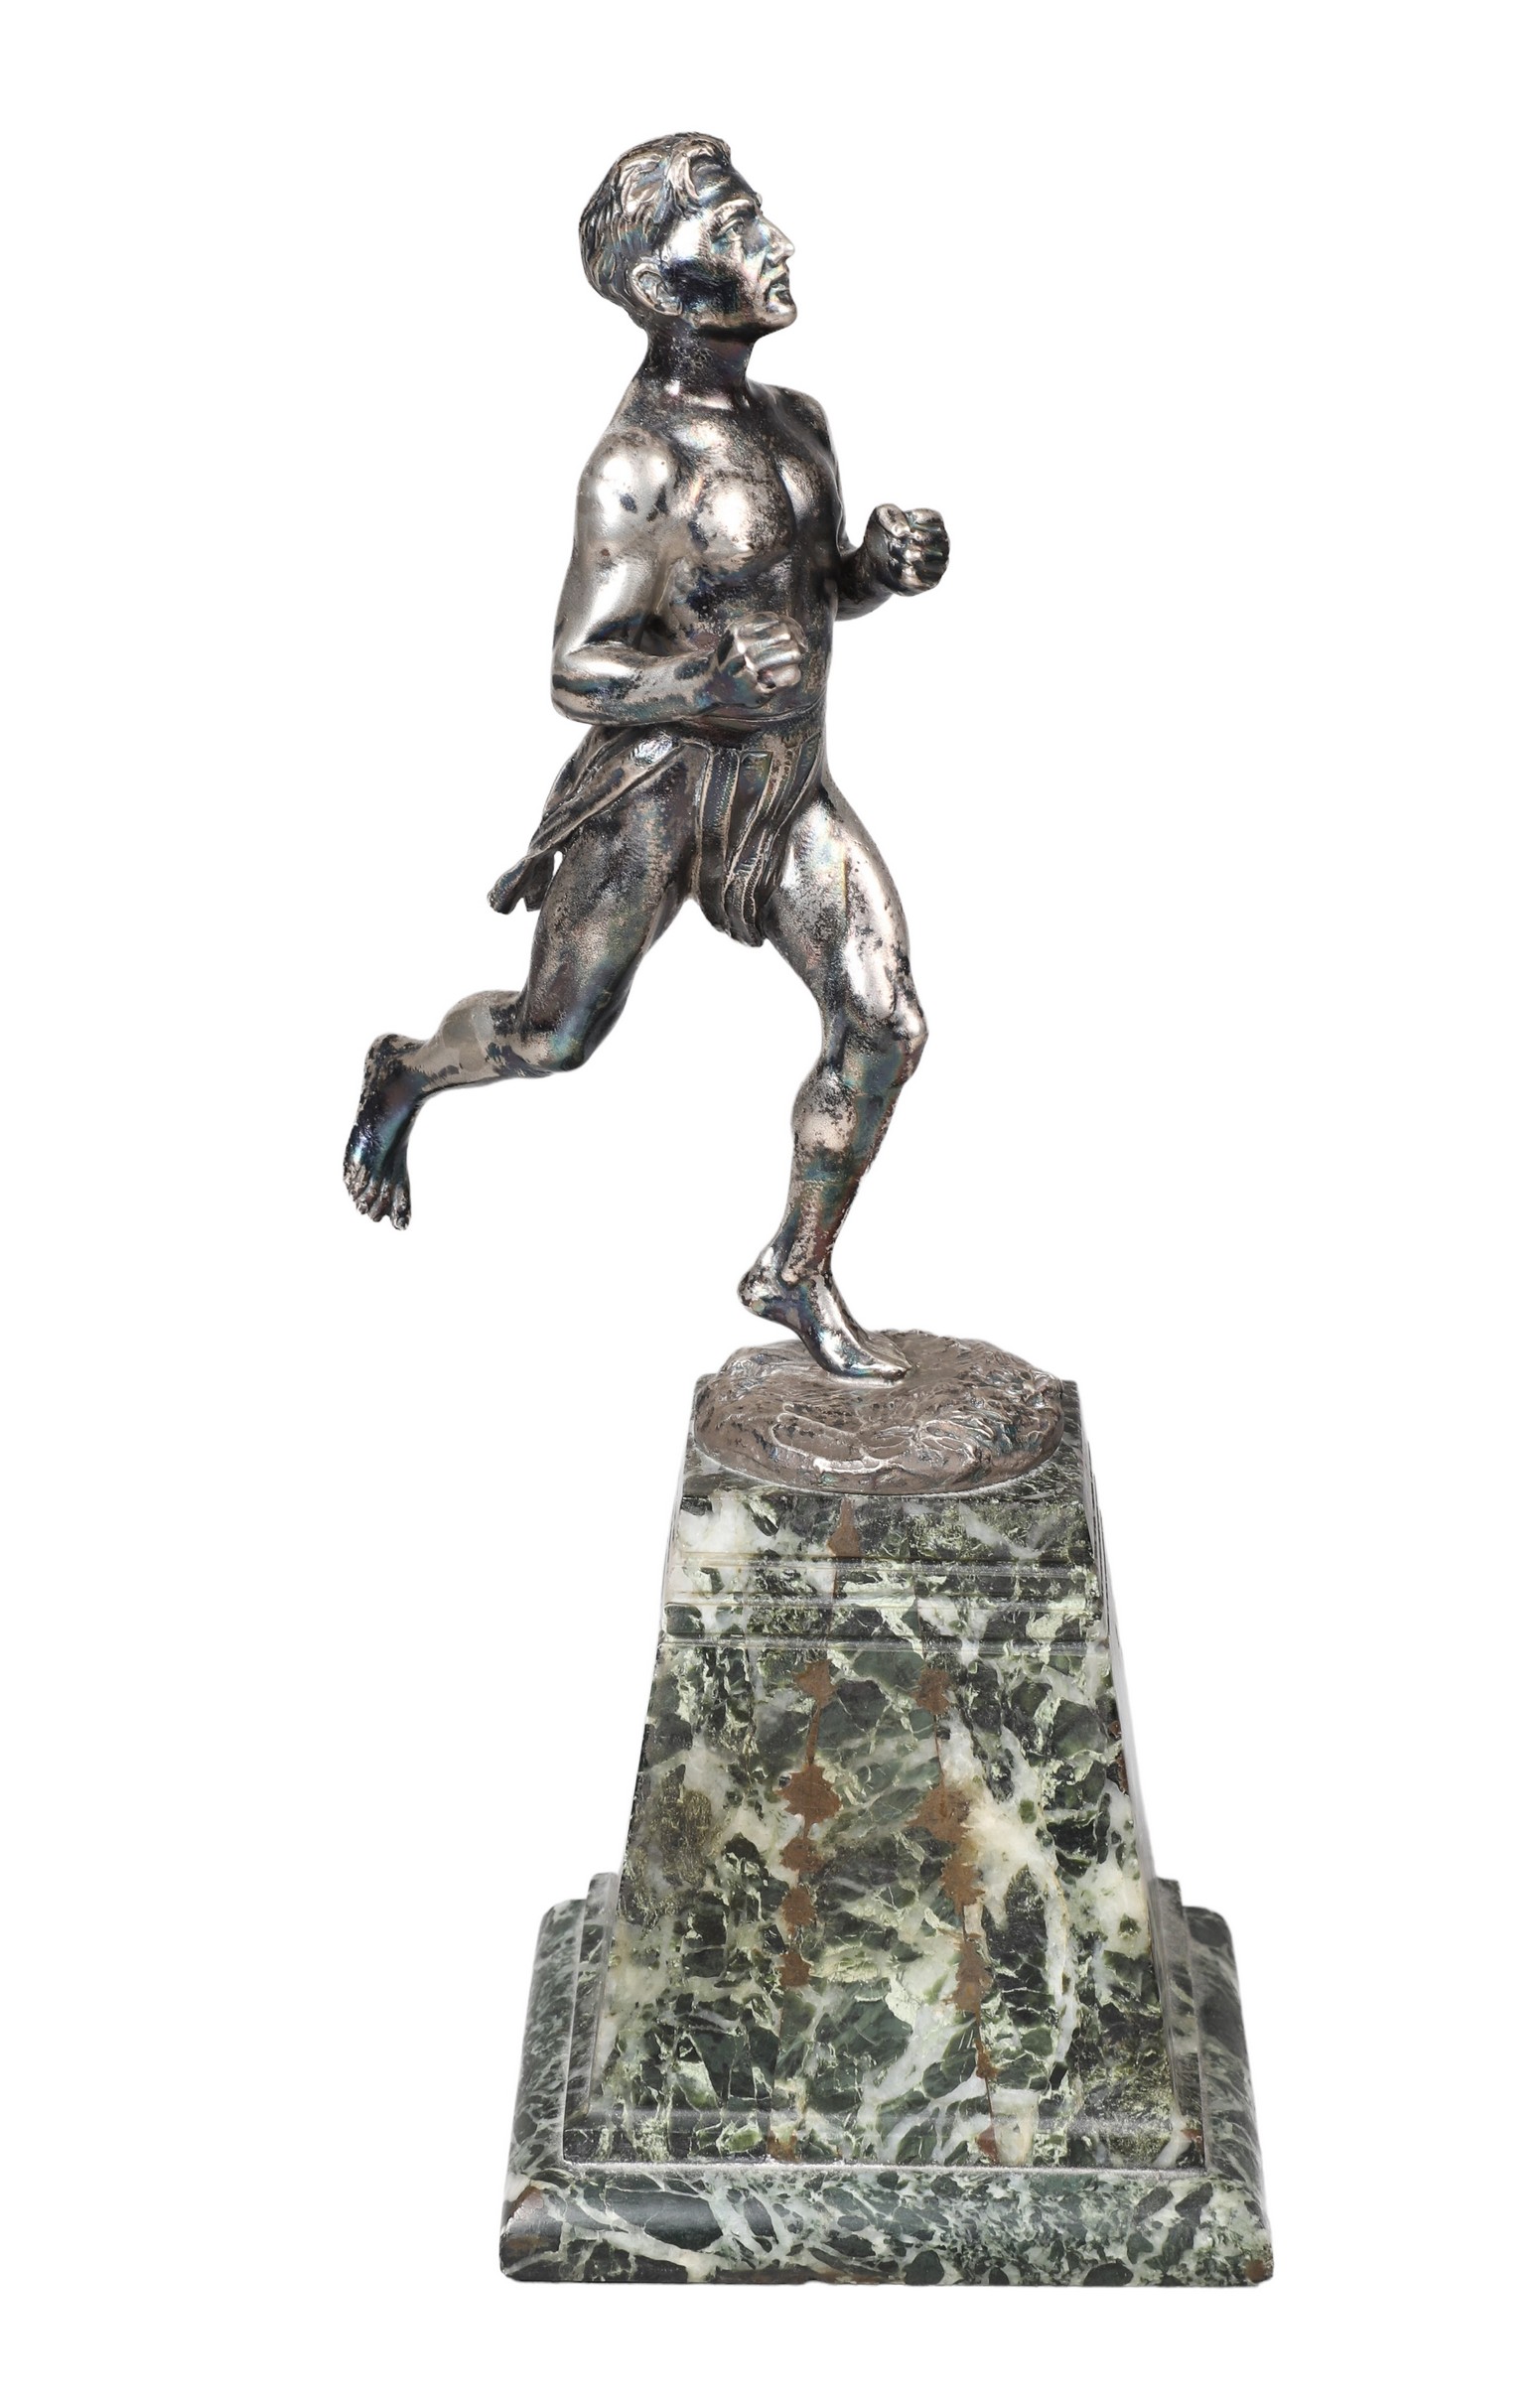 Silver statue of a Roman man, running